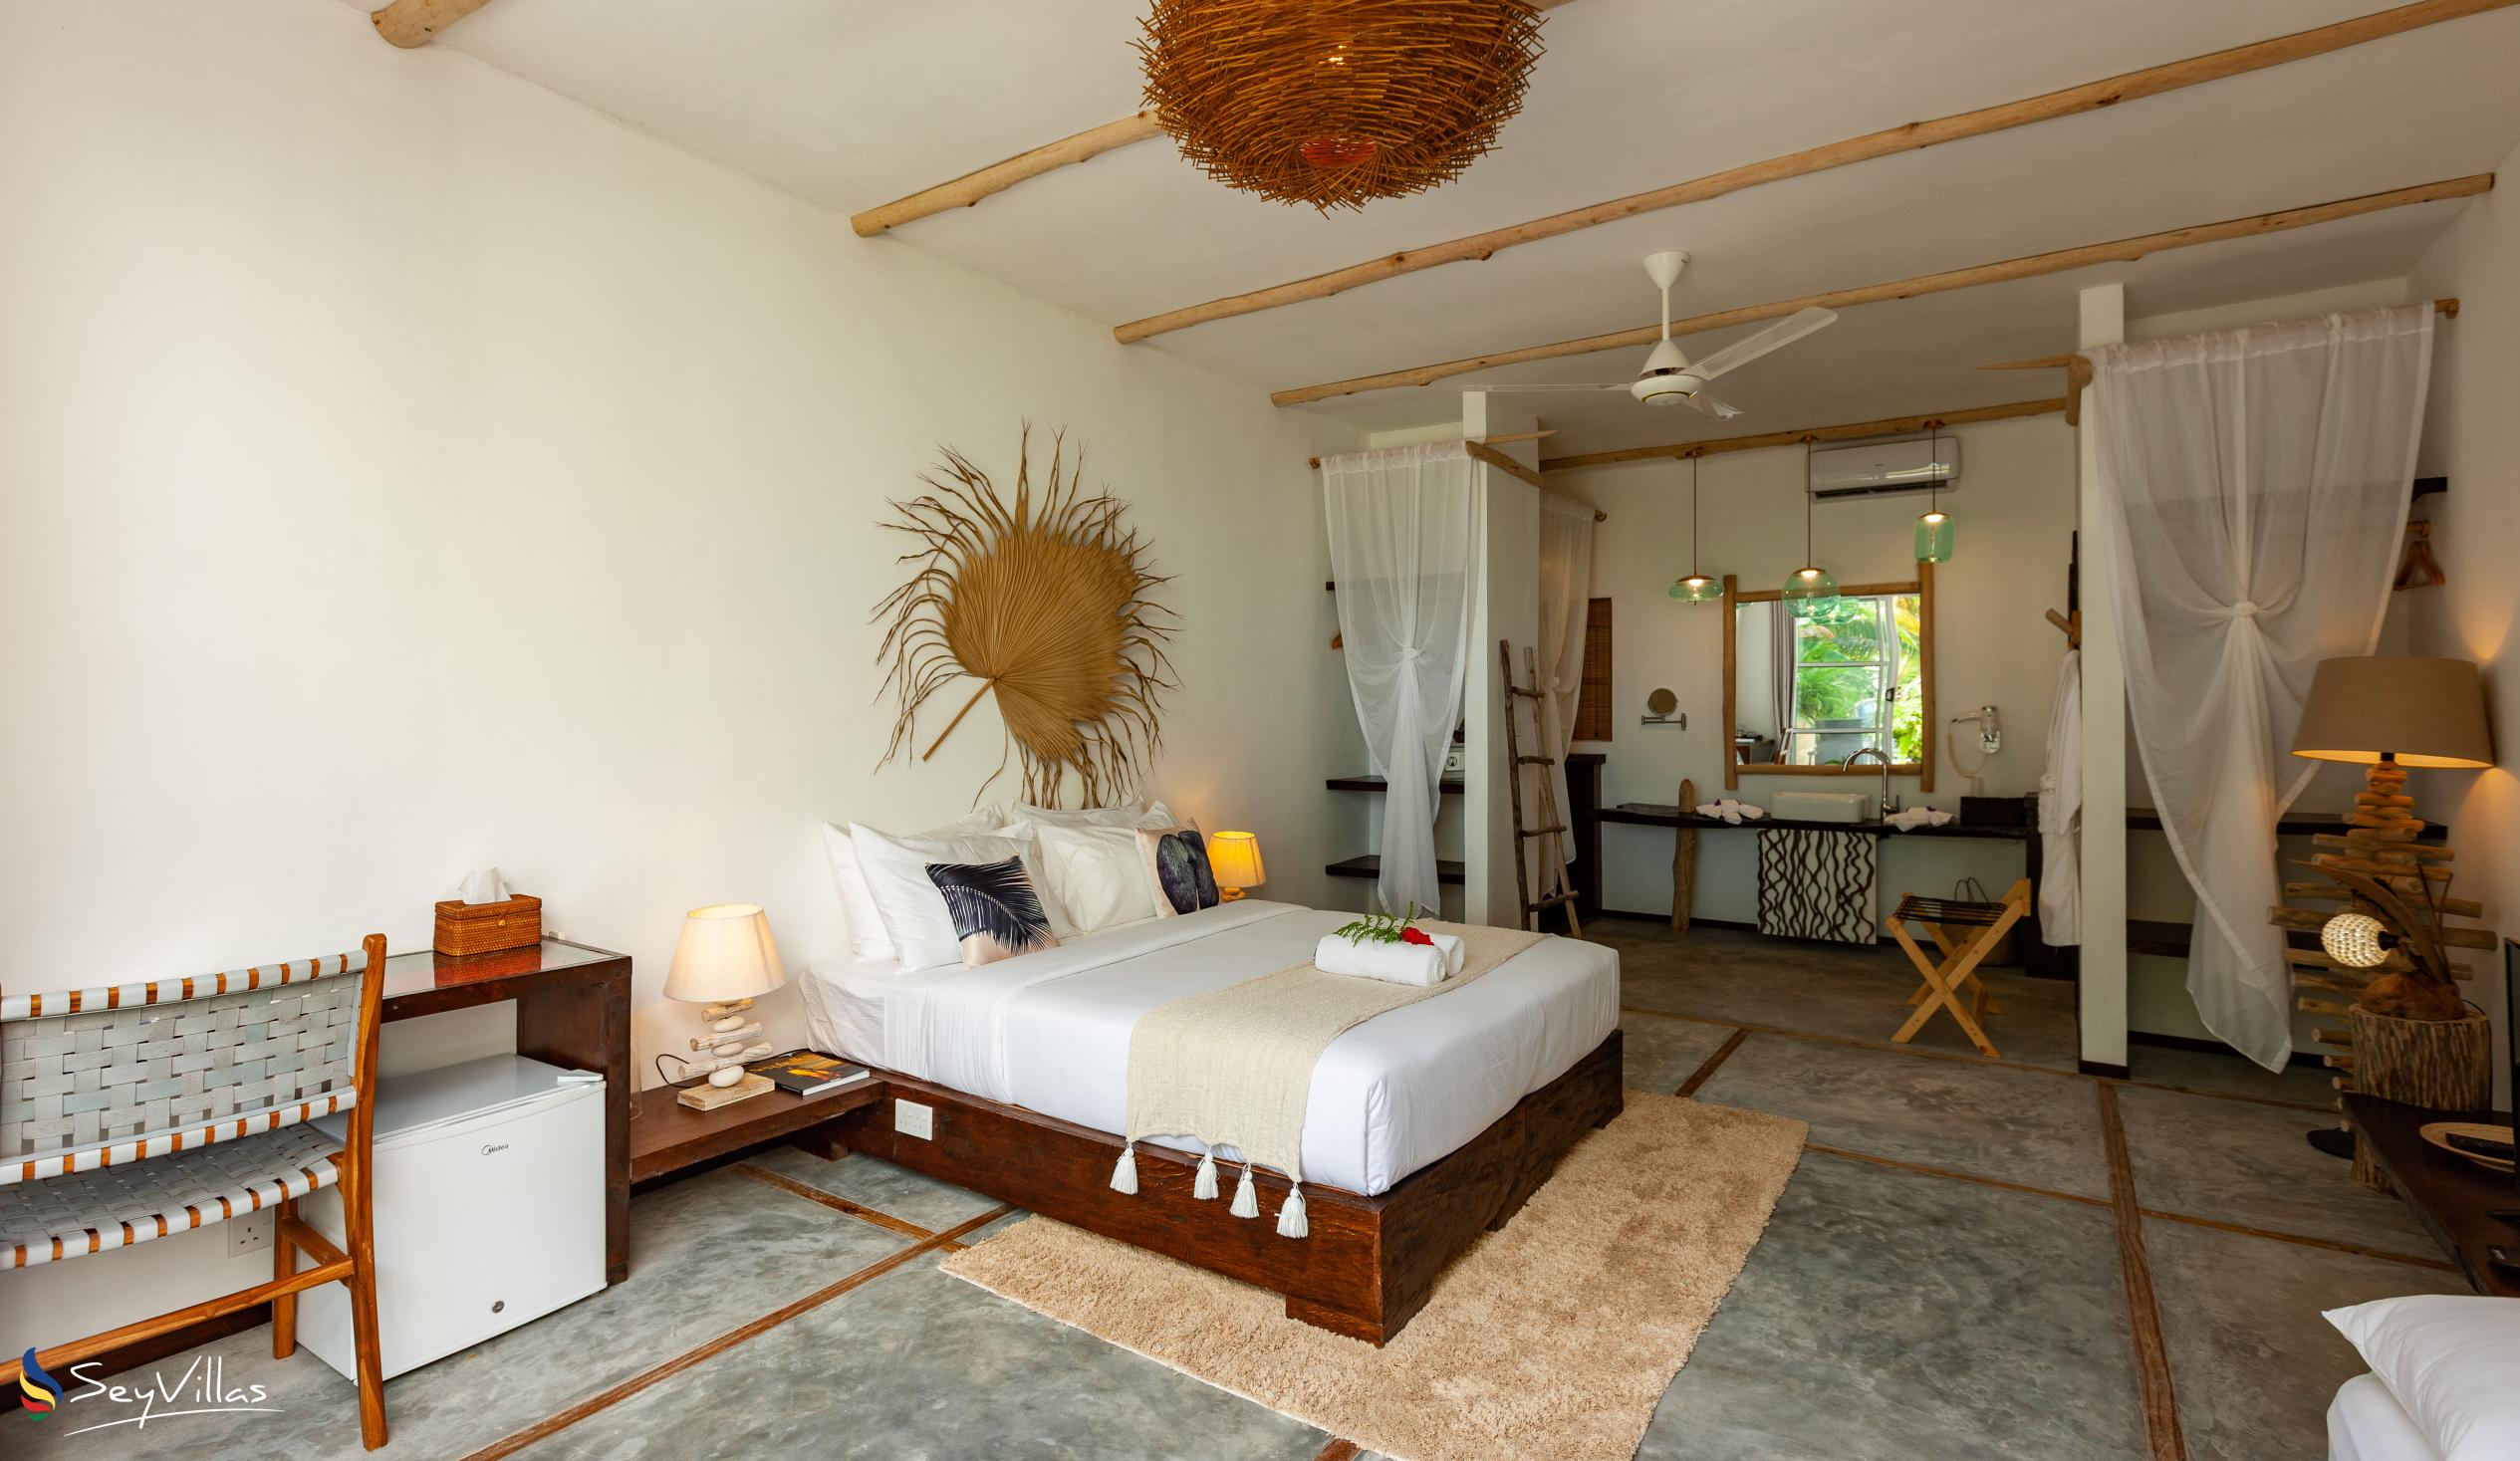 Photo 123: Bliss Hotel Praslin - Beach House - Beach Superior Room - Praslin (Seychelles)